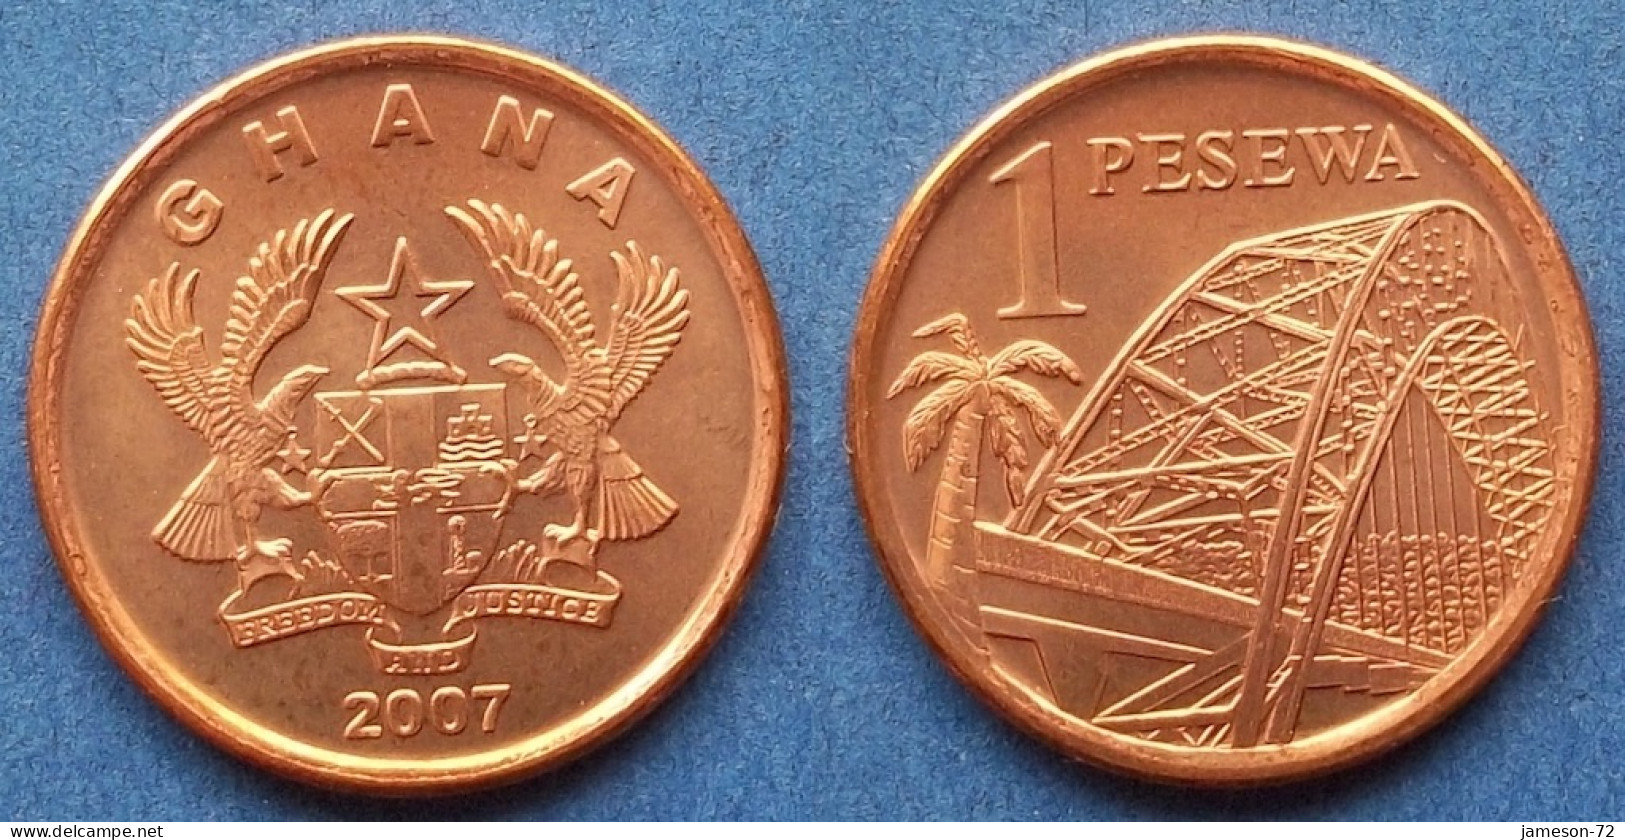 GHANA - 1 Pesewa 2007 "Adomi Bridge" KM# 37 Reform Coinage (2007) - Edelweiss Coins - Ghana